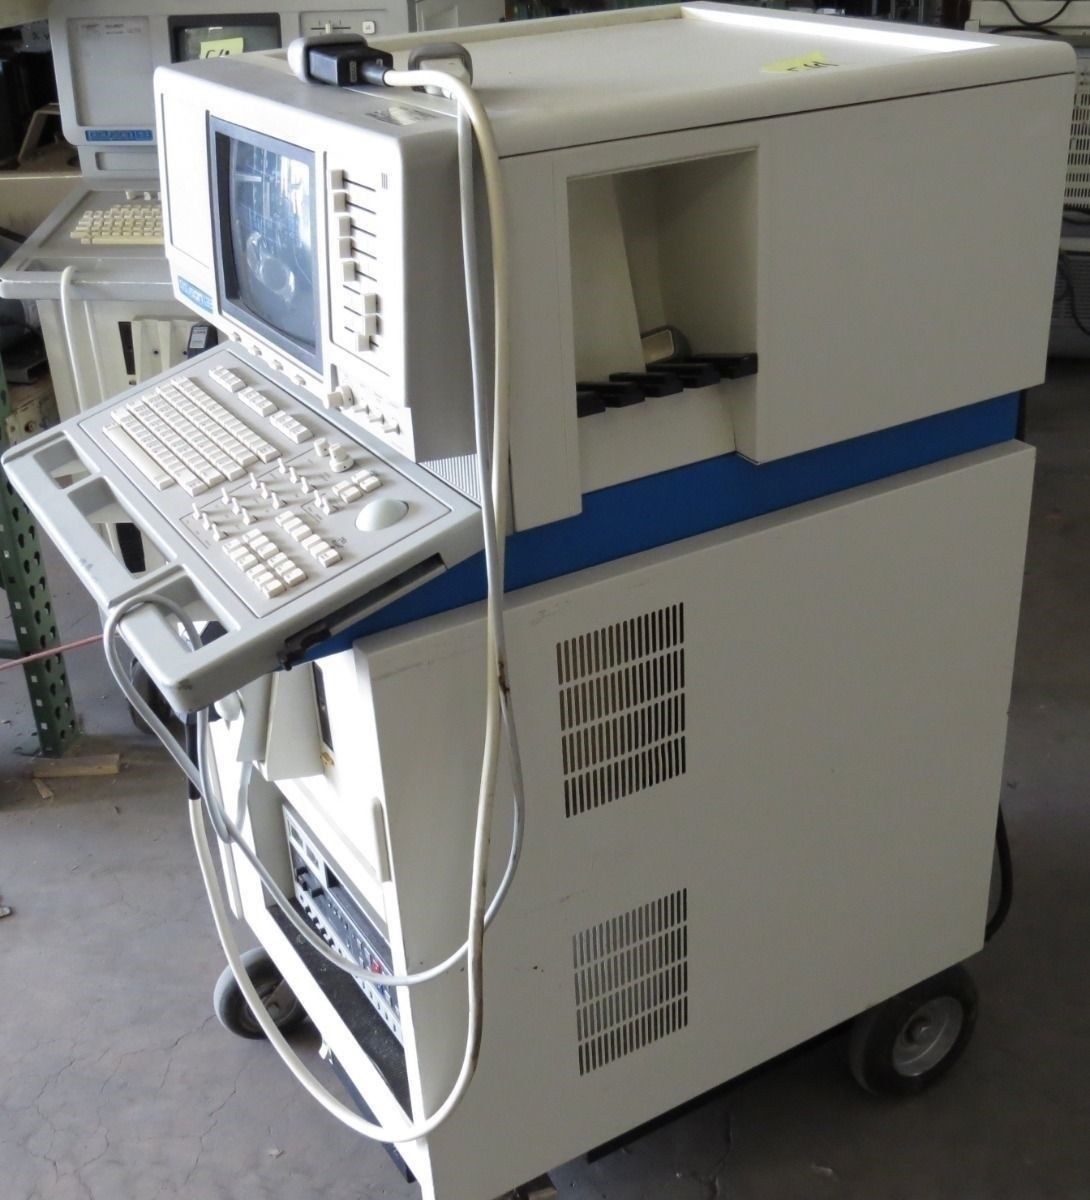 ACUSON 128 Ultrasound SONOGRAPHY Unit (#511) DIAGNOSTIC ULTRASOUND MACHINES FOR SALE